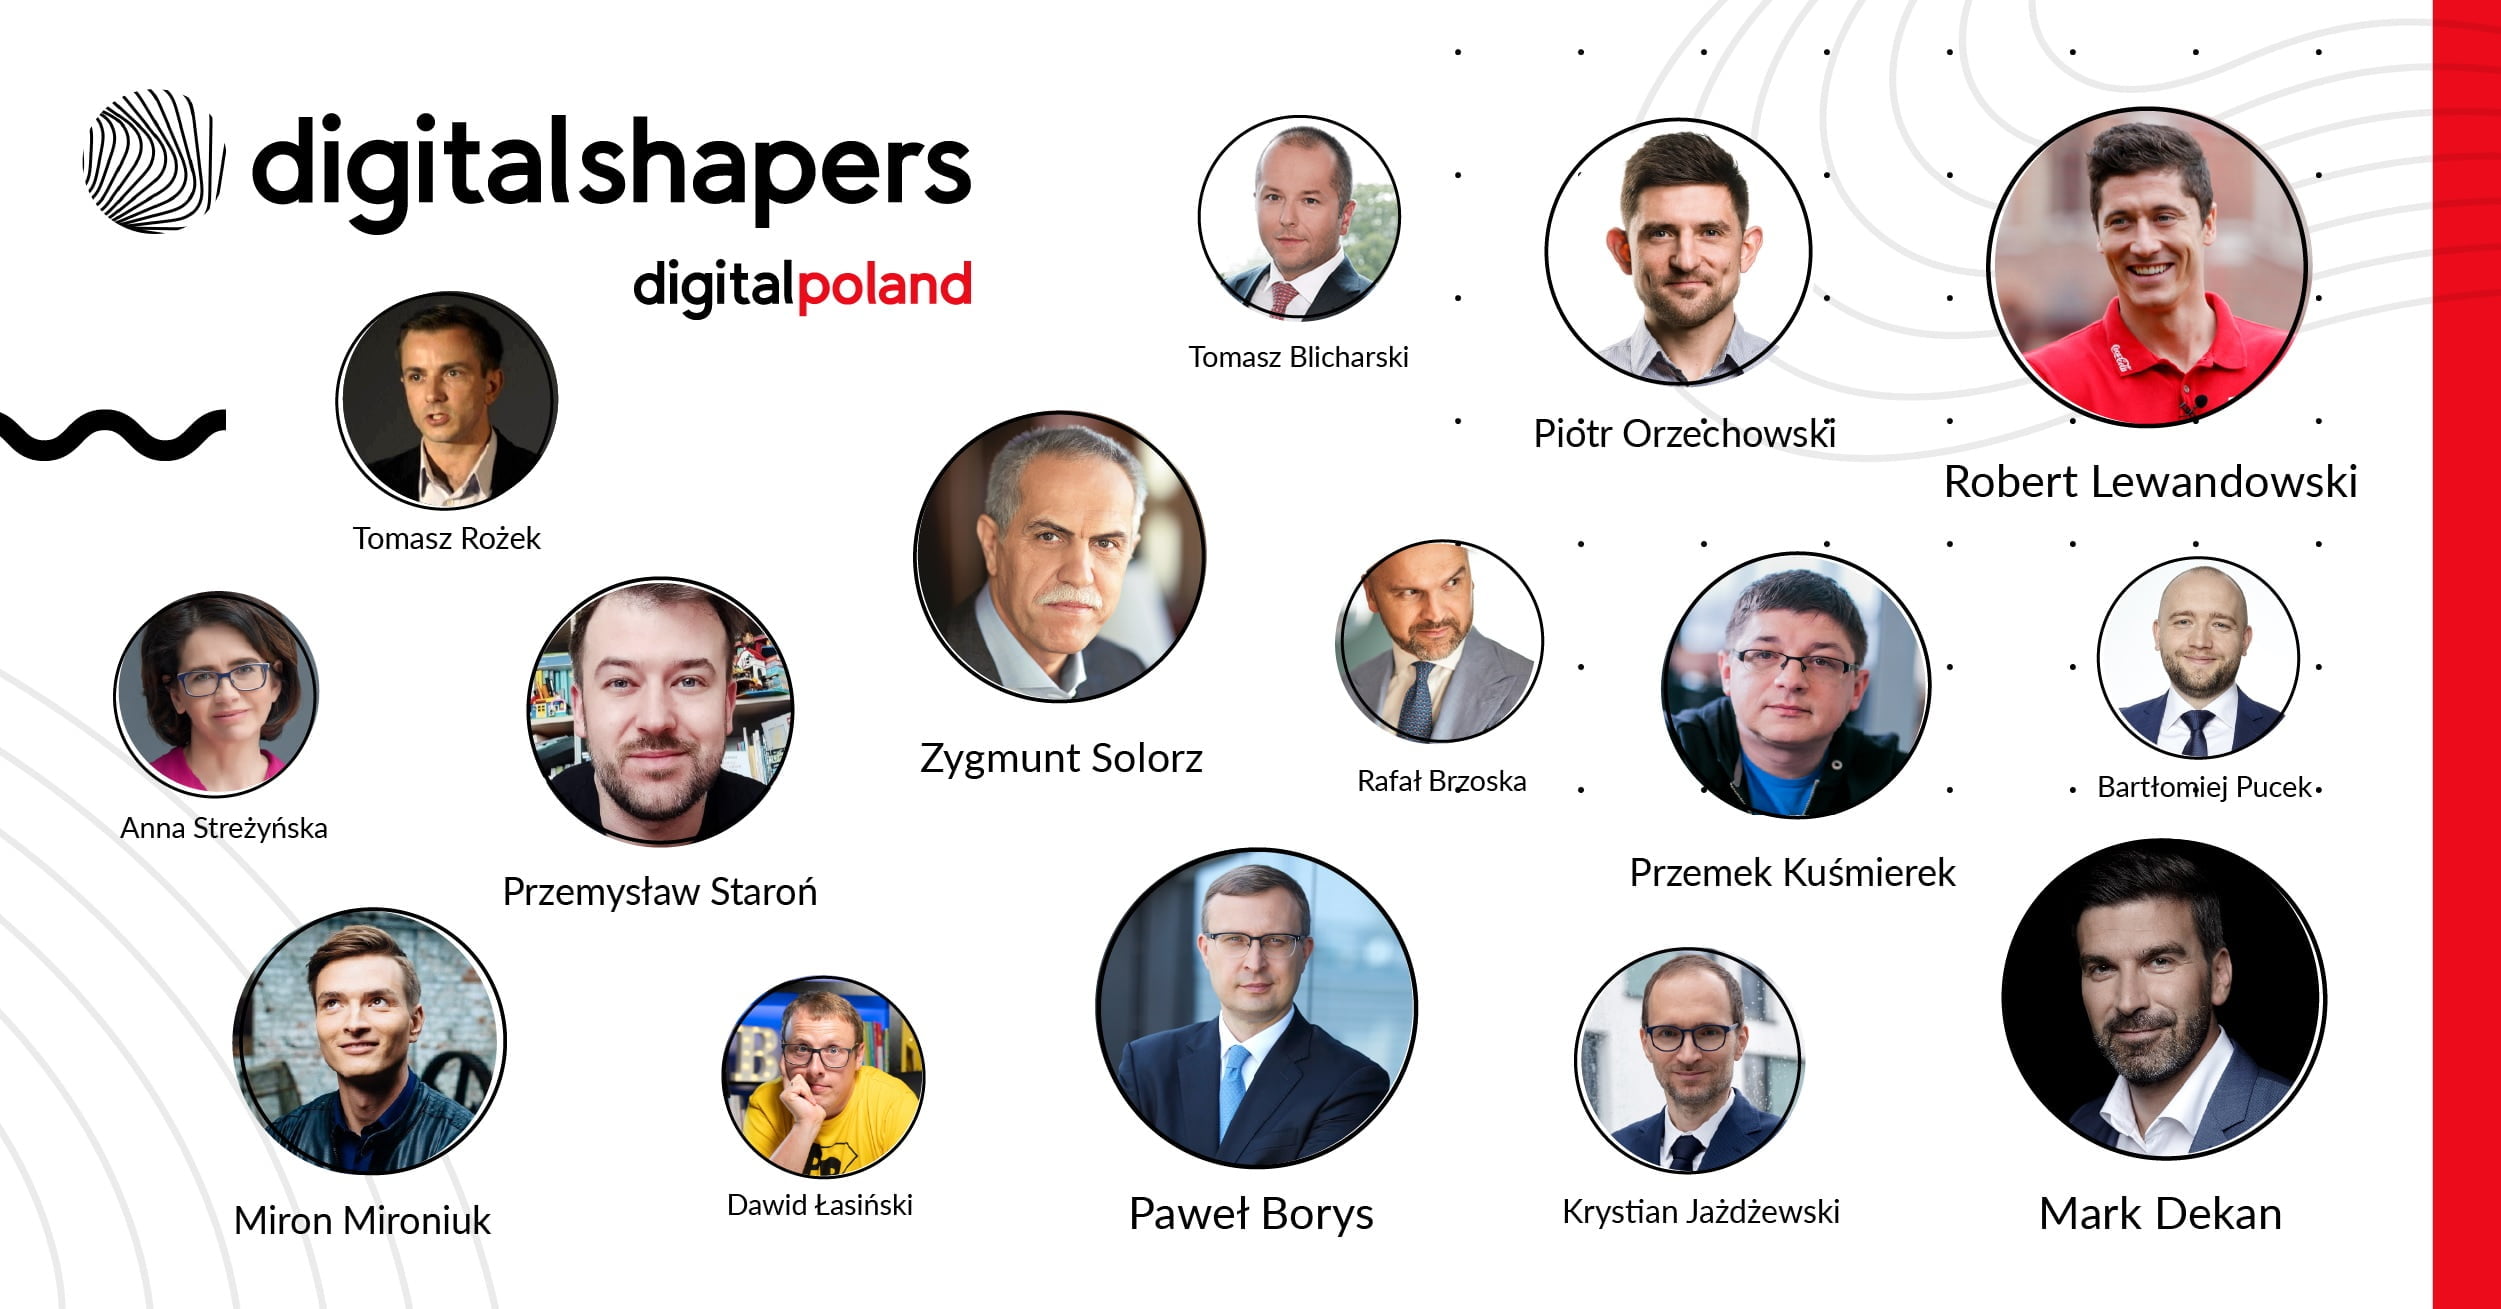 digital shapers 2020